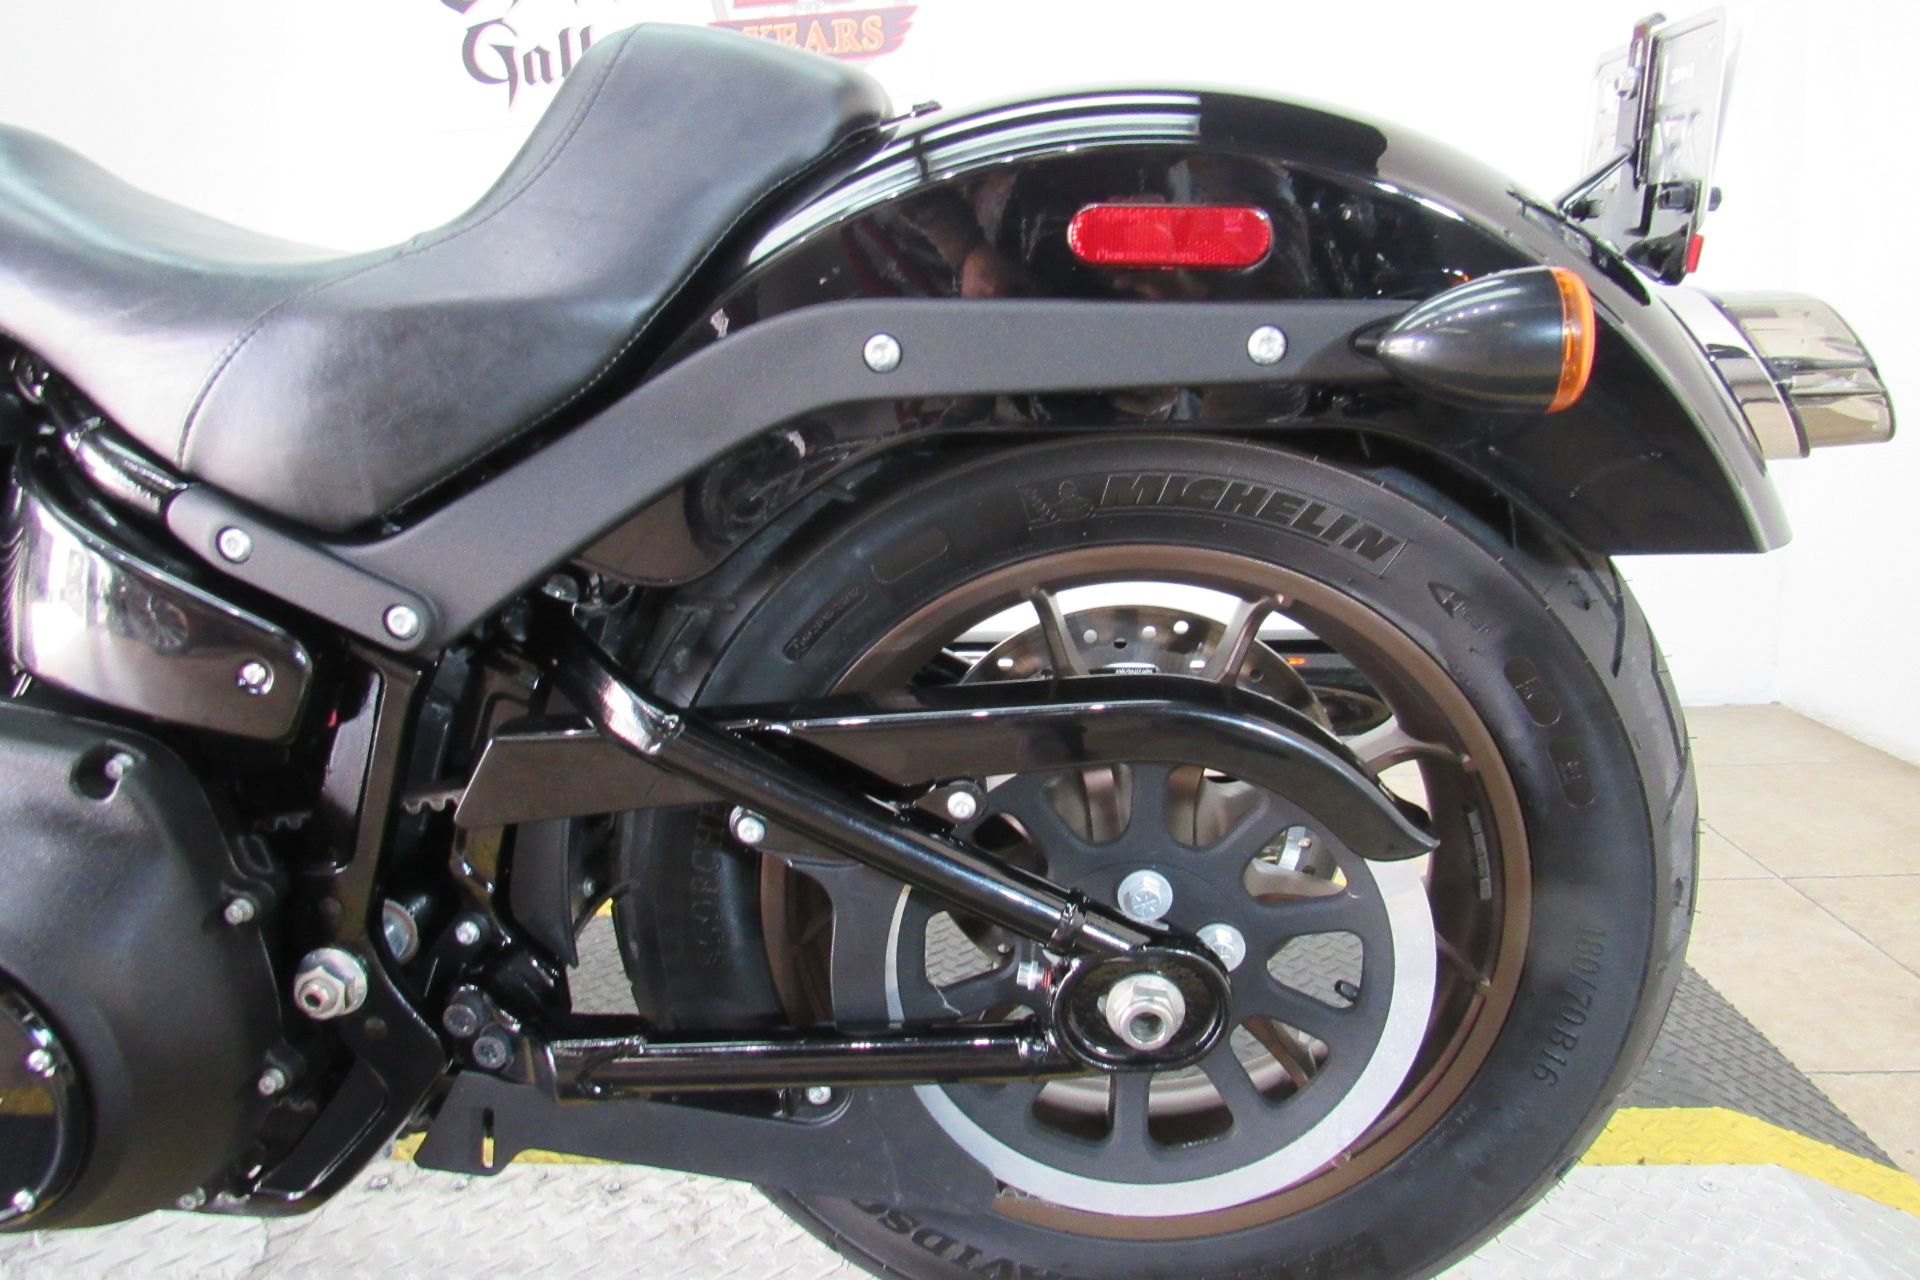 2021 Harley-Davidson Low Rider®S in Temecula, California - Photo 30